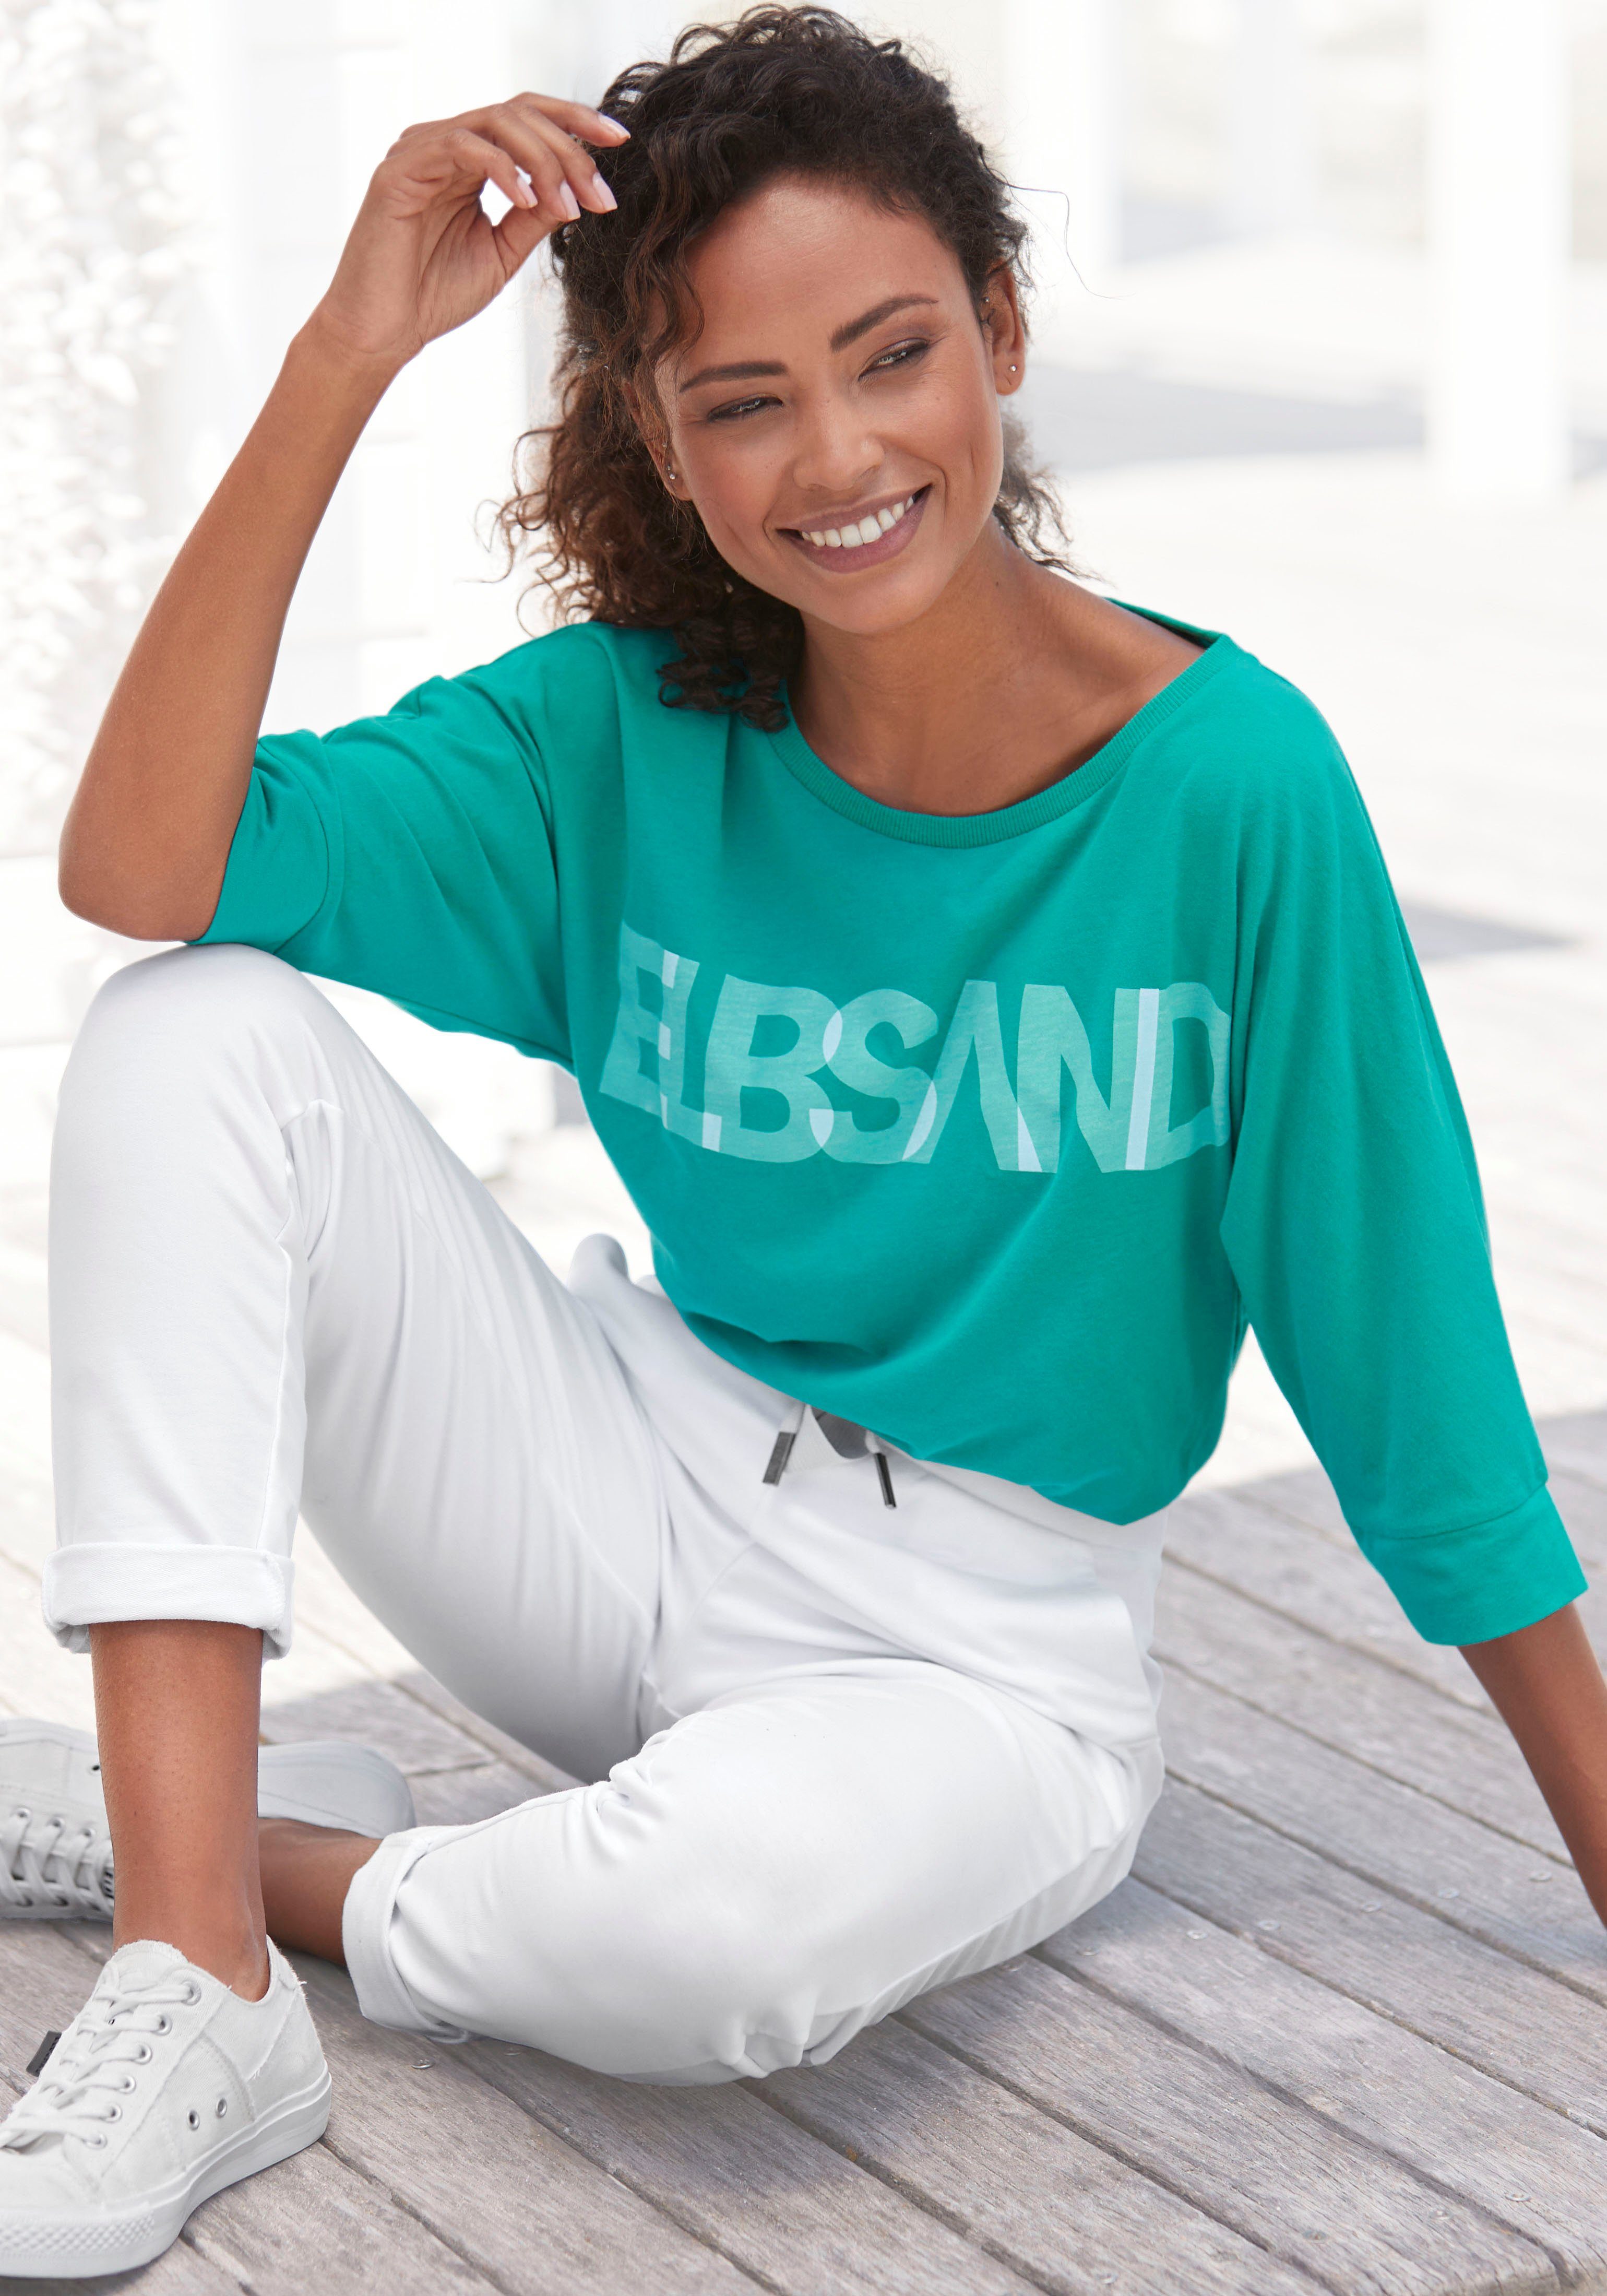 Elbsand 3/4-Arm-Shirt mit Logodruck, Baumwoll-Mix, lockere Passform seaweed teal